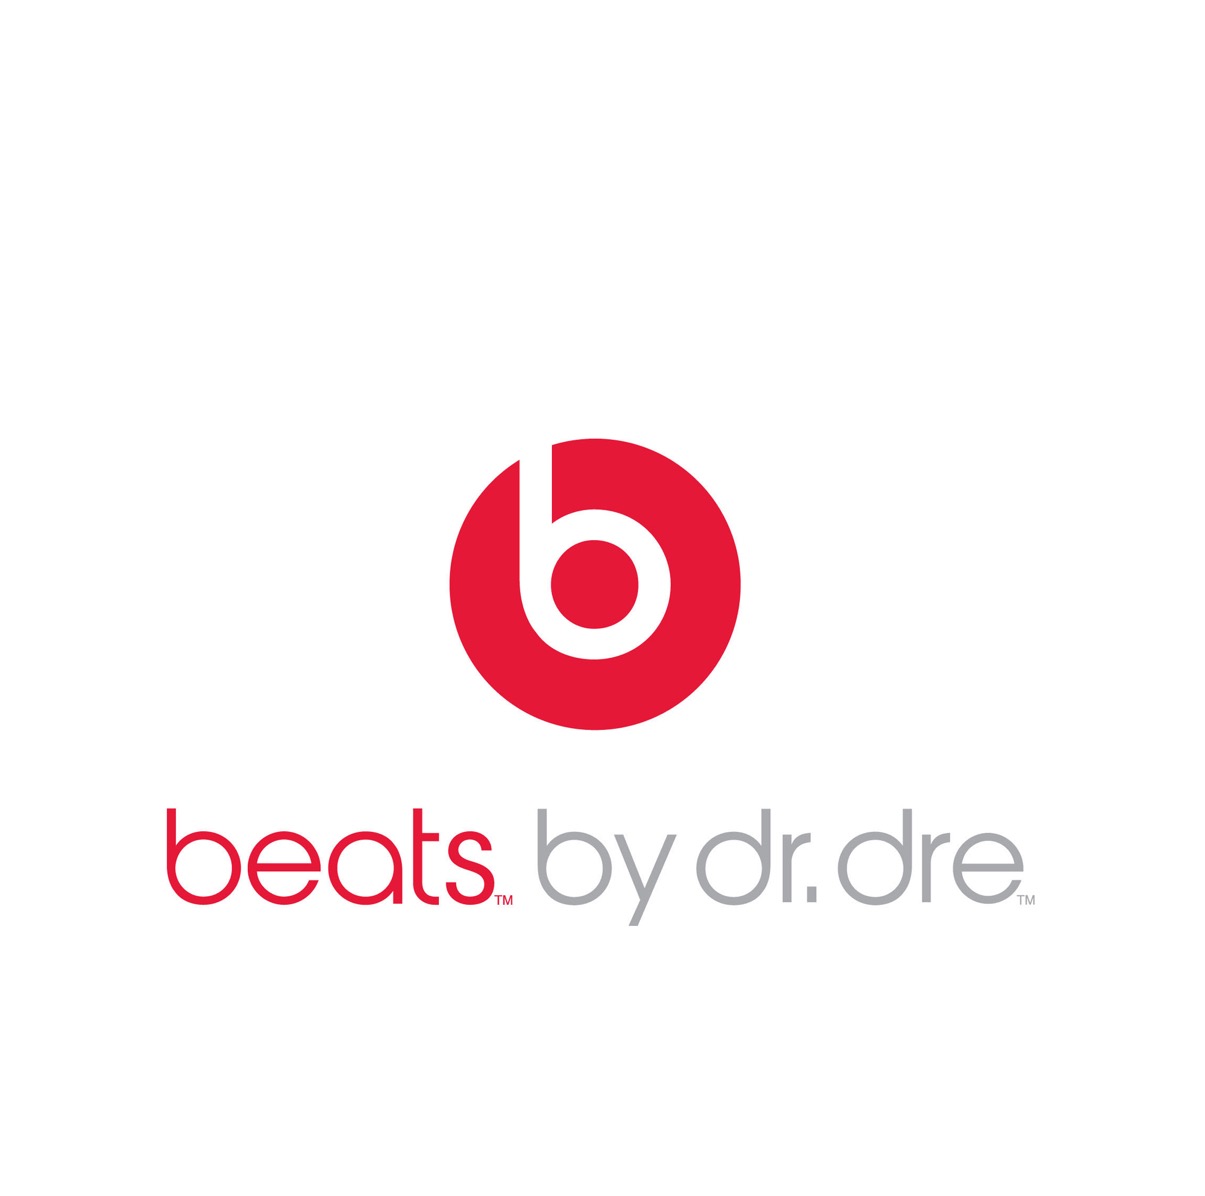 Logo beats by dr. dre